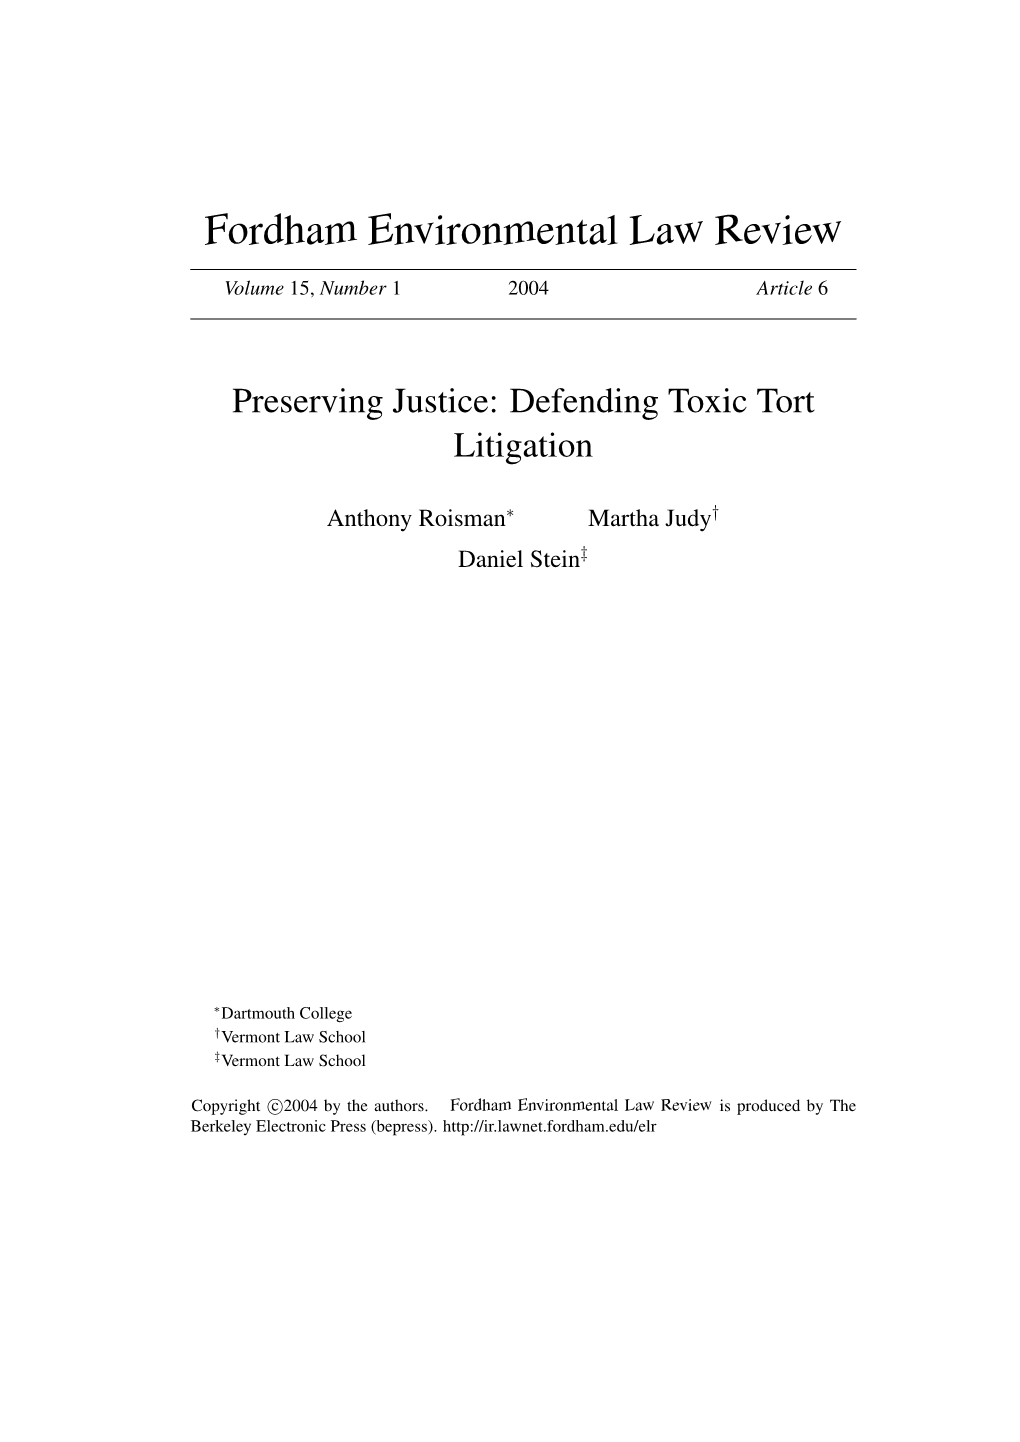 Preserving Justice: Defending Toxic Tort Litigation